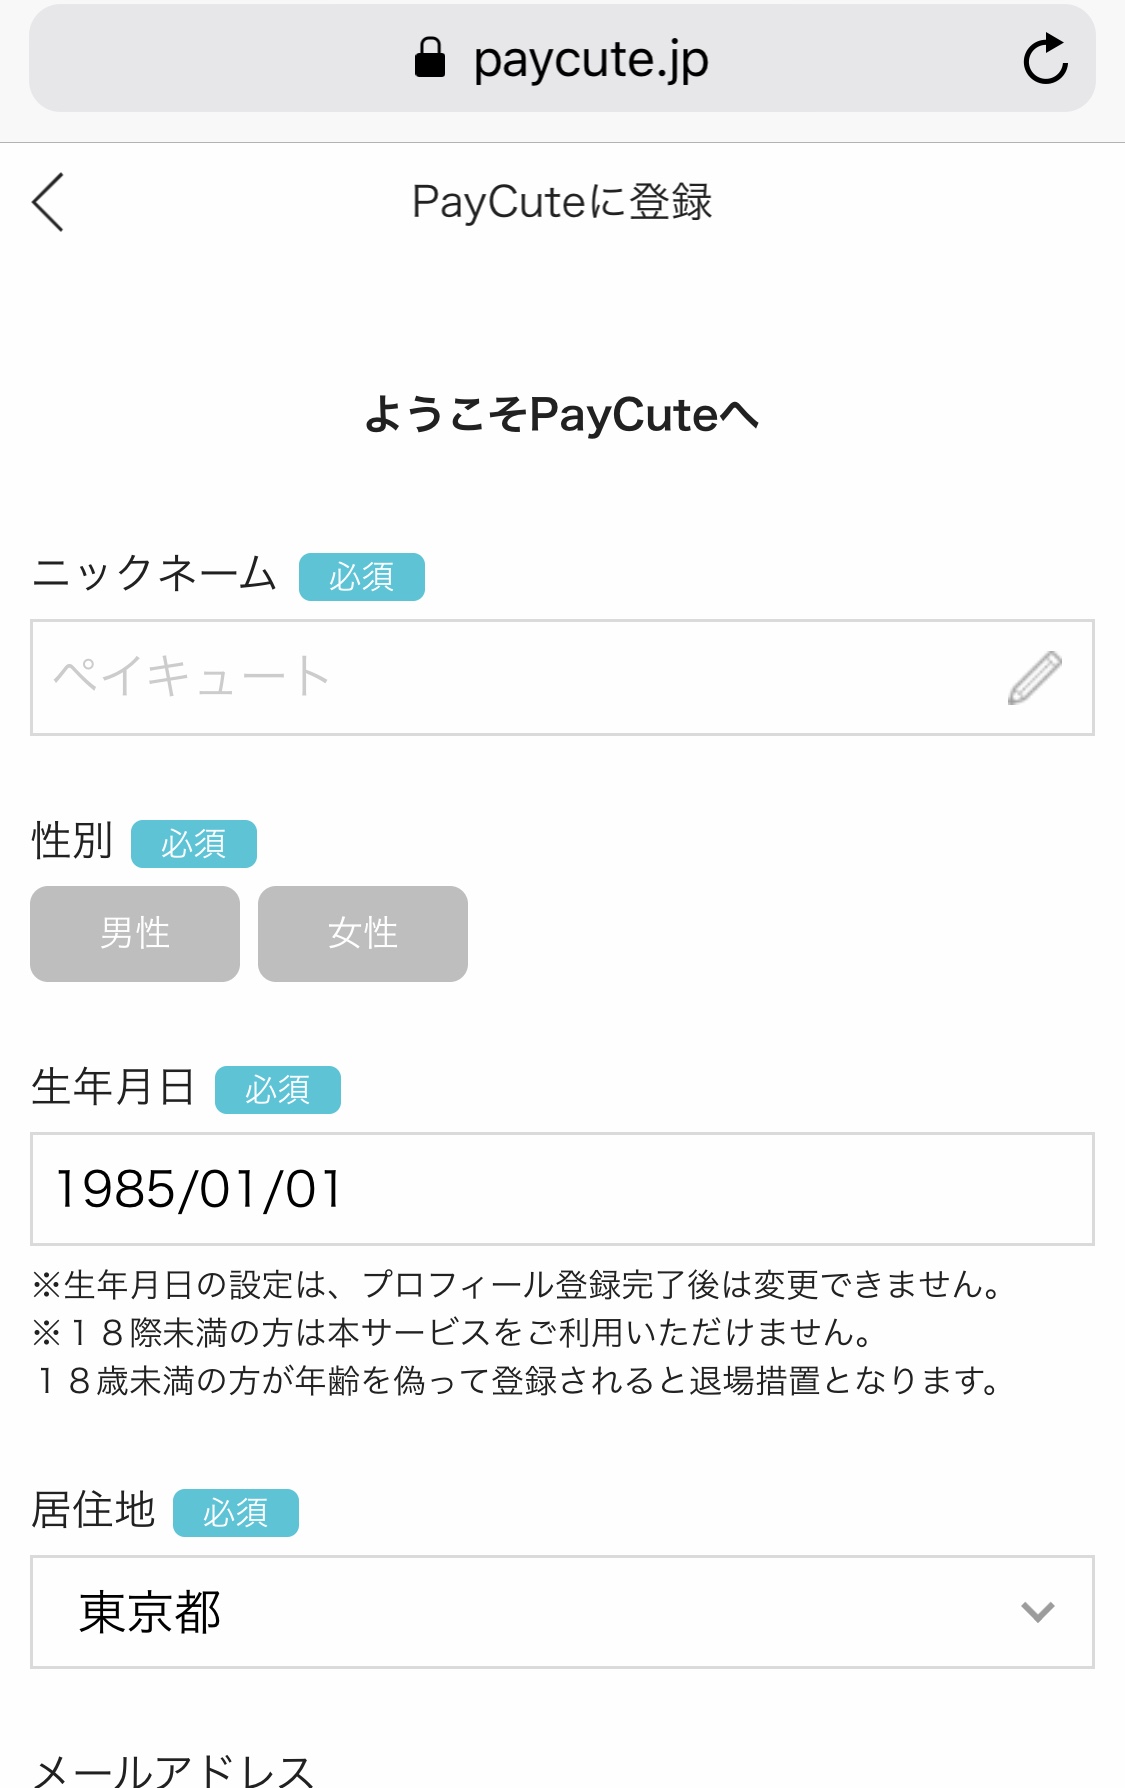 PayCute(ペイキュート) 登録 プロフィール登録画面